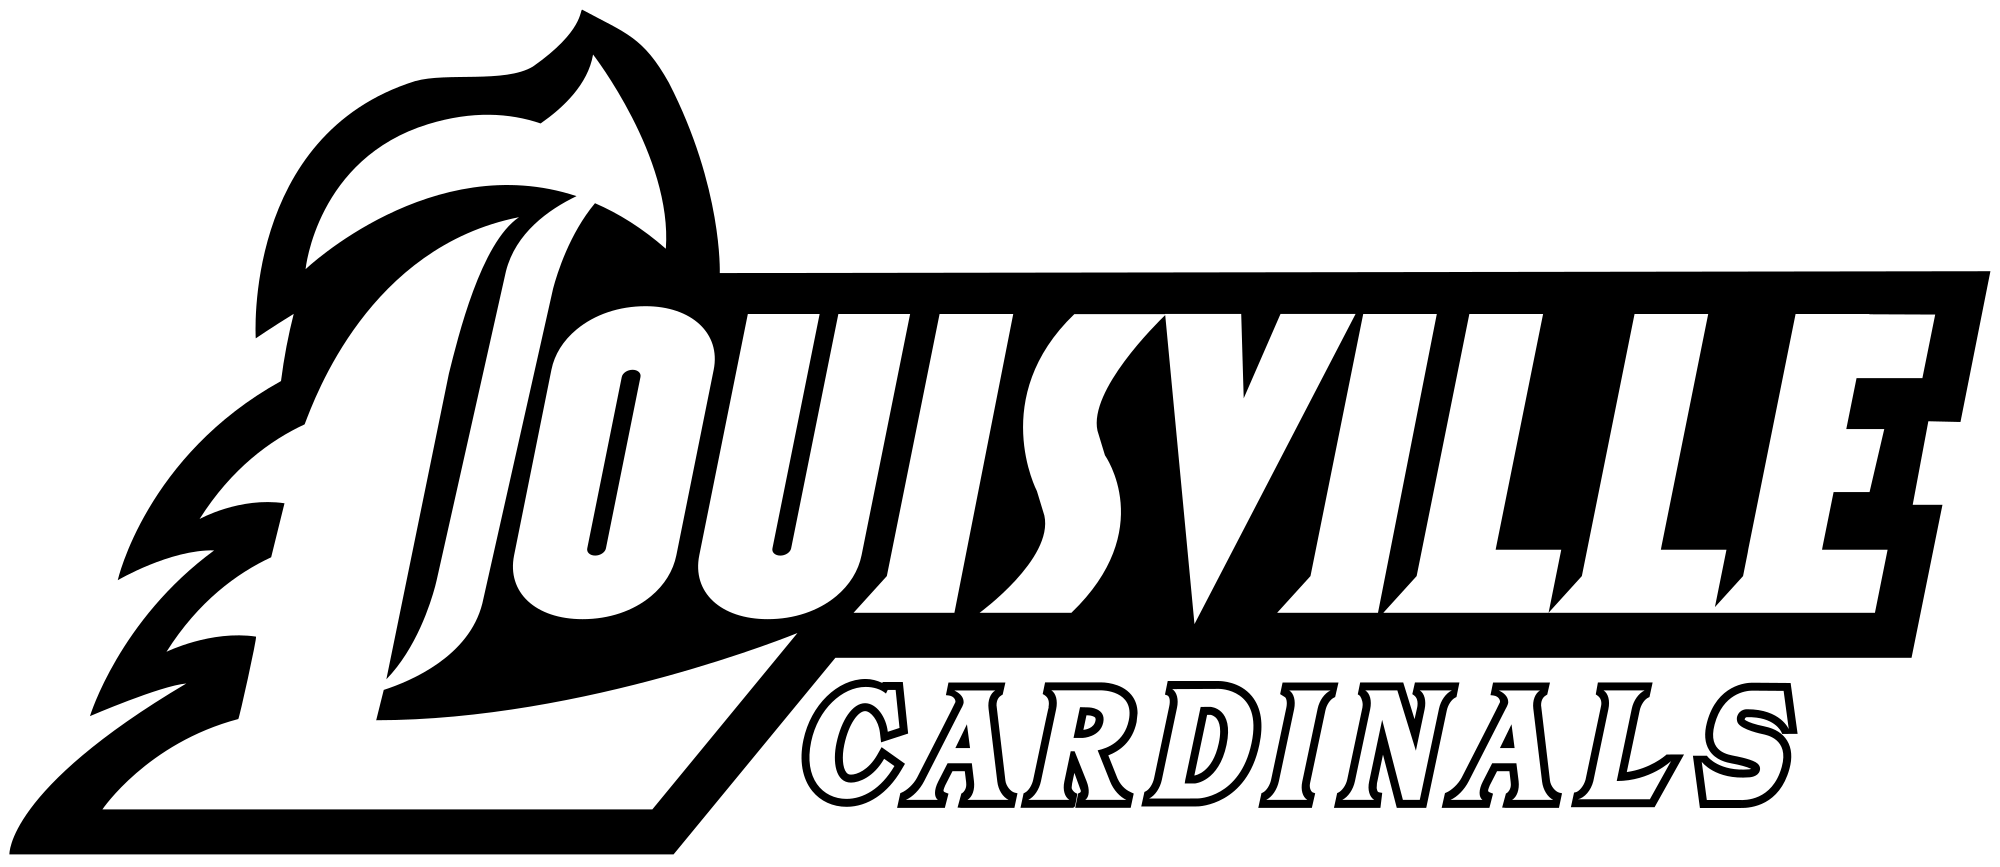 Louisville Cardinals Logo - File:Louisville Cardinals text logo.svg - Wikimedia Commons